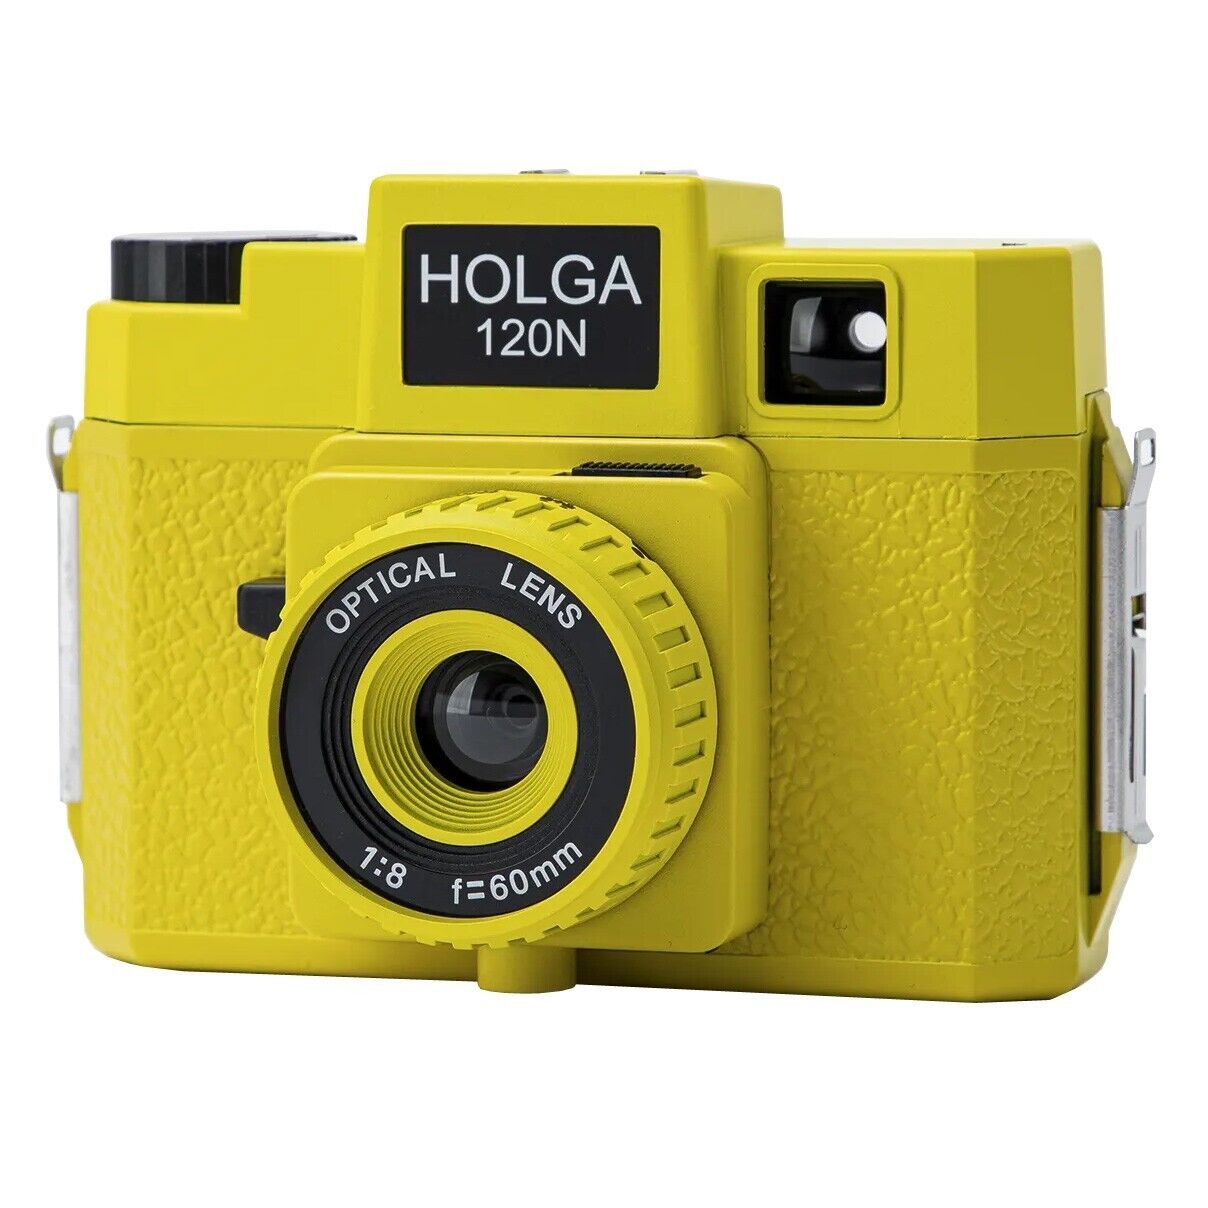 HOLGA 120N Yellow Film Camera